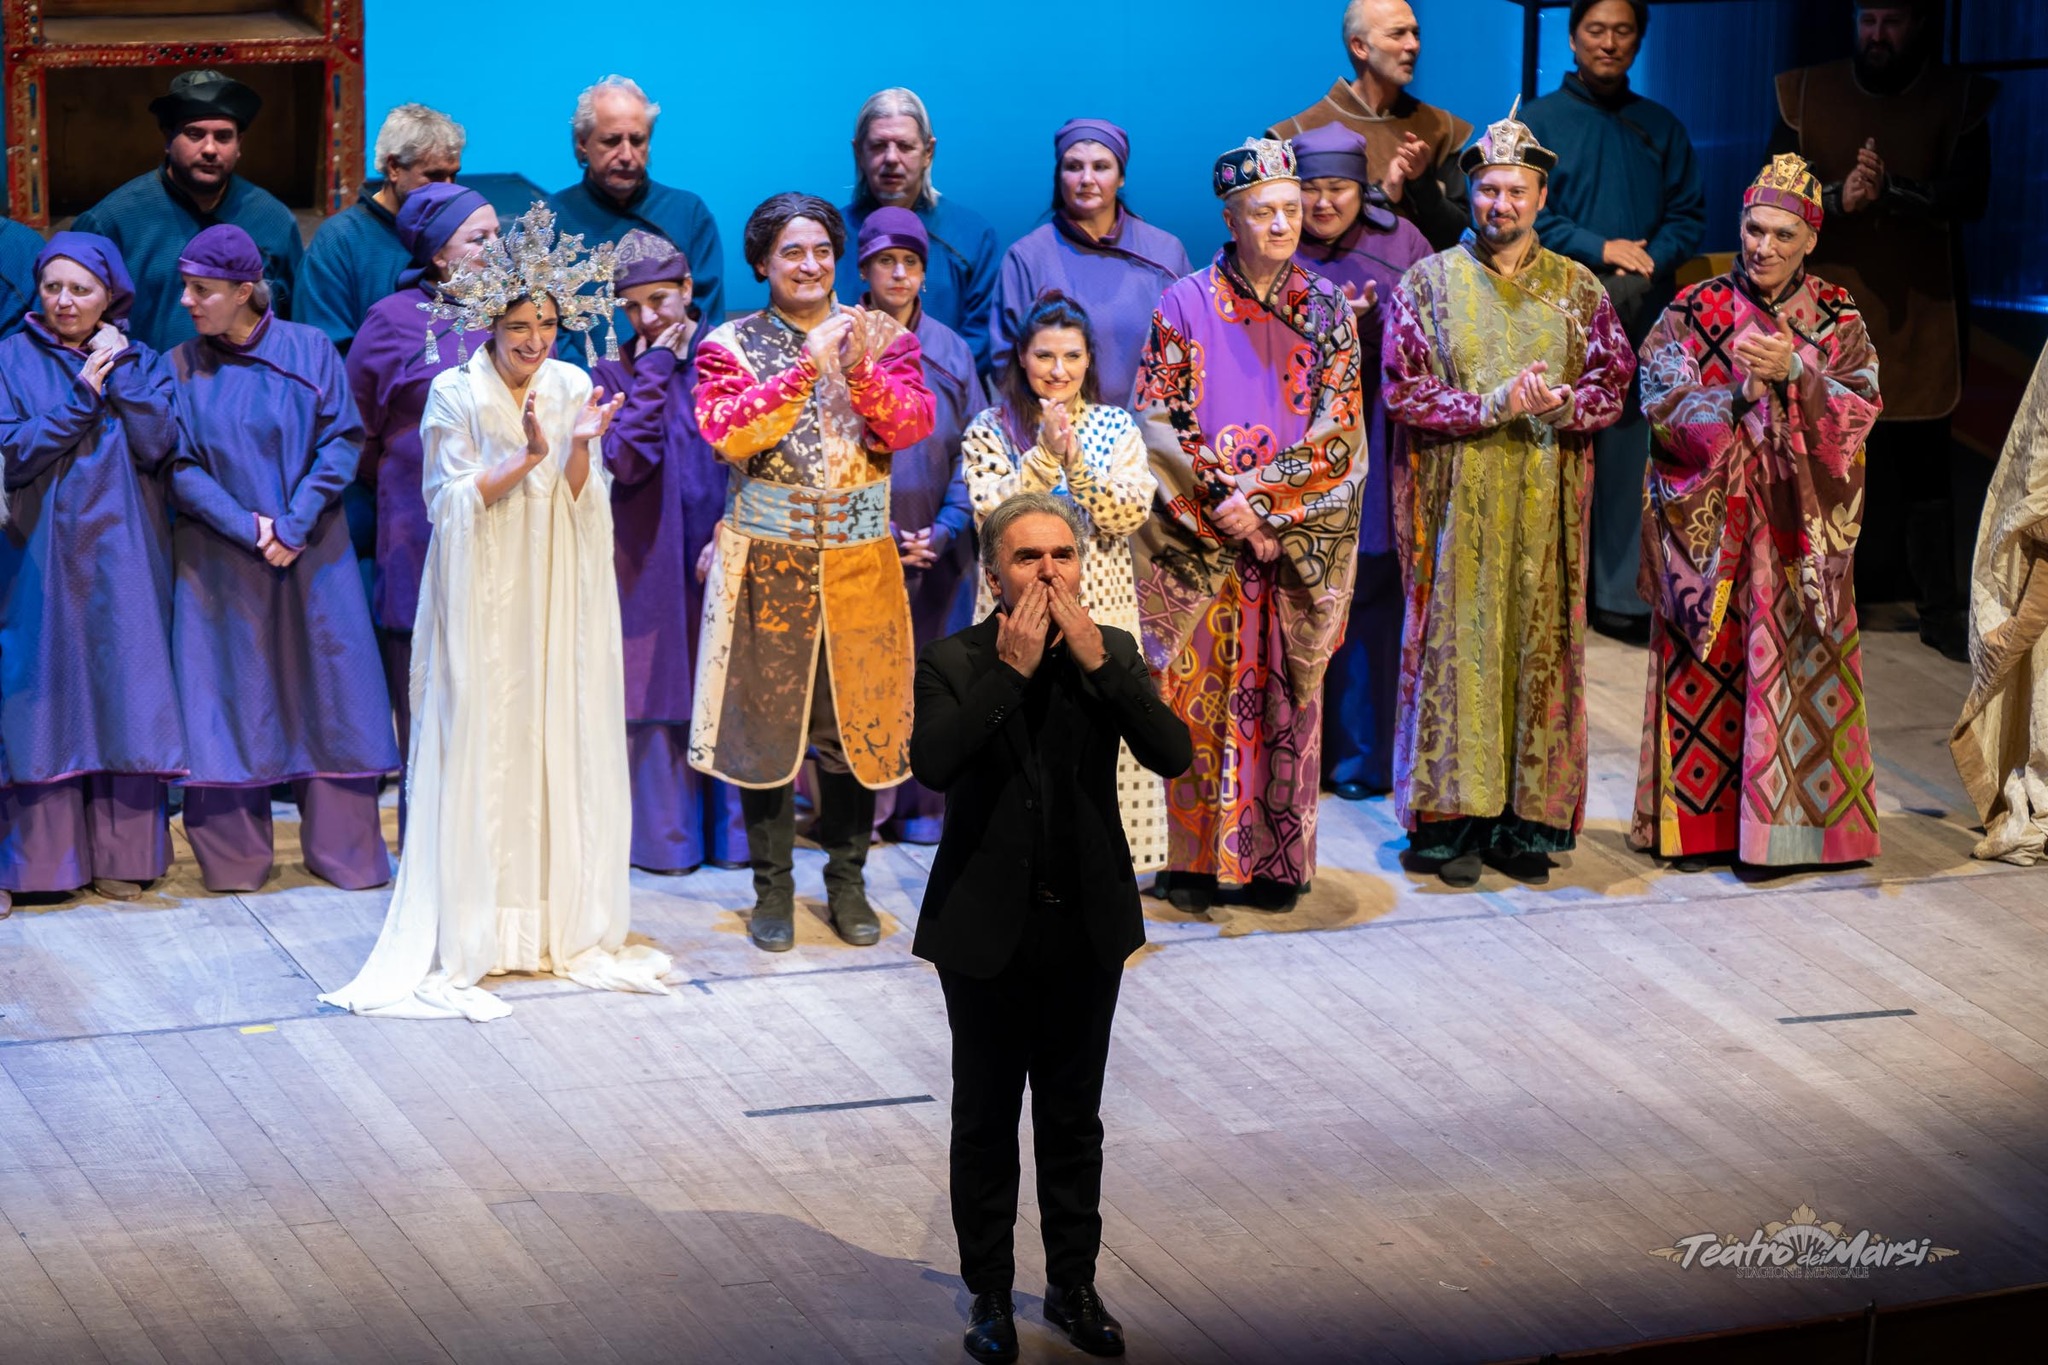 La Turandot al Teatro dei Marsi: sei minuti di applausi ininterrotti